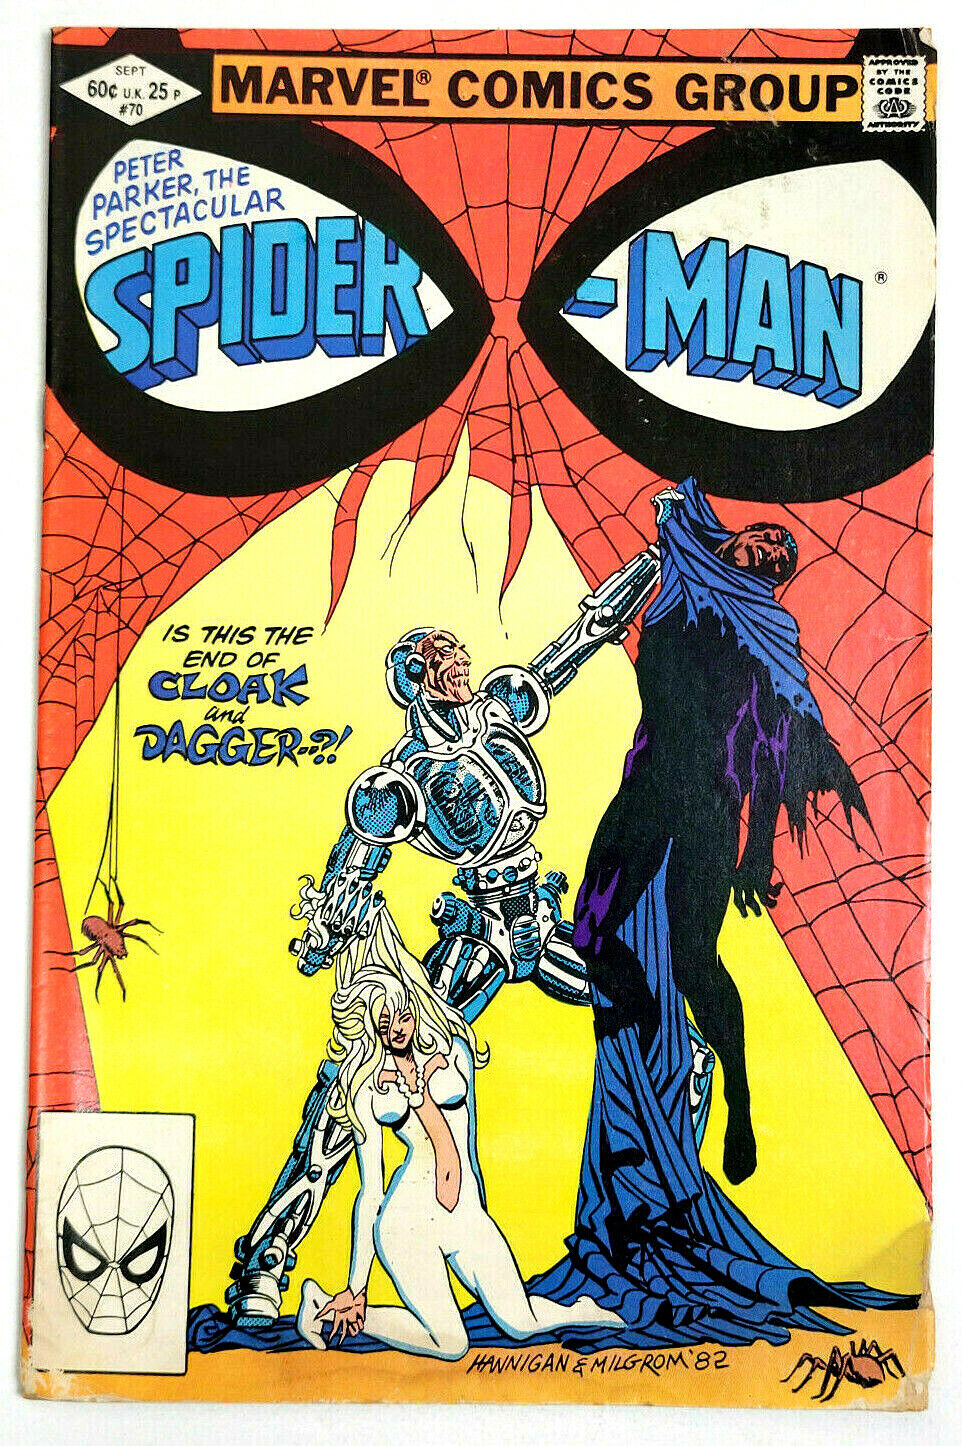 PETER PARKER THE SPECTACULAR SPIDER-MAN  # 70 - (1982) CLOAK & DAGGER APP